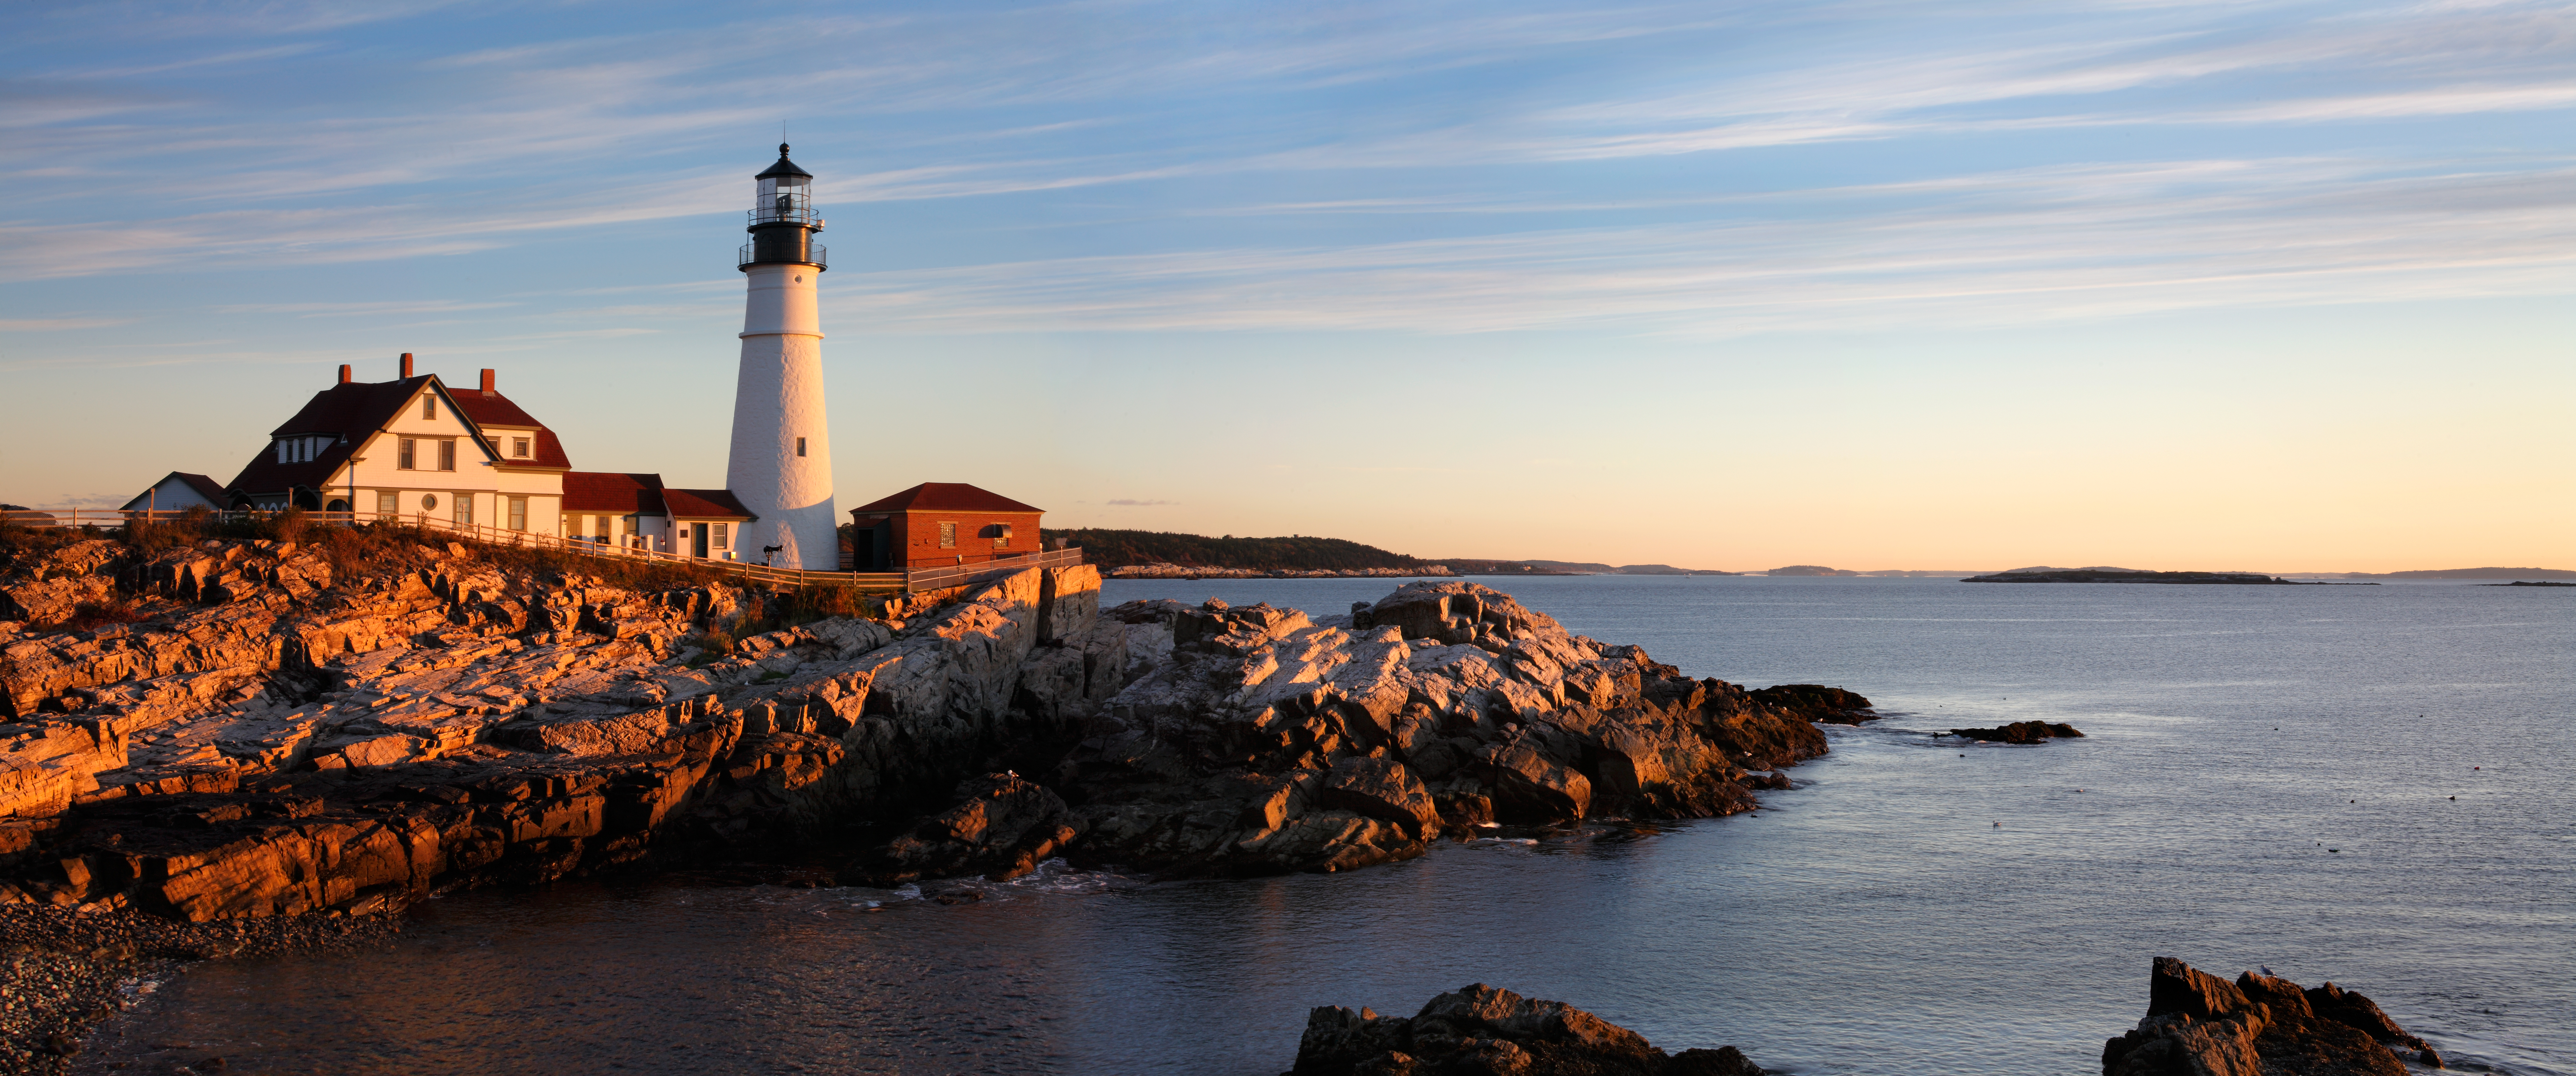 HCF Funds Curriculum Development to Meet Maine’s State Standards